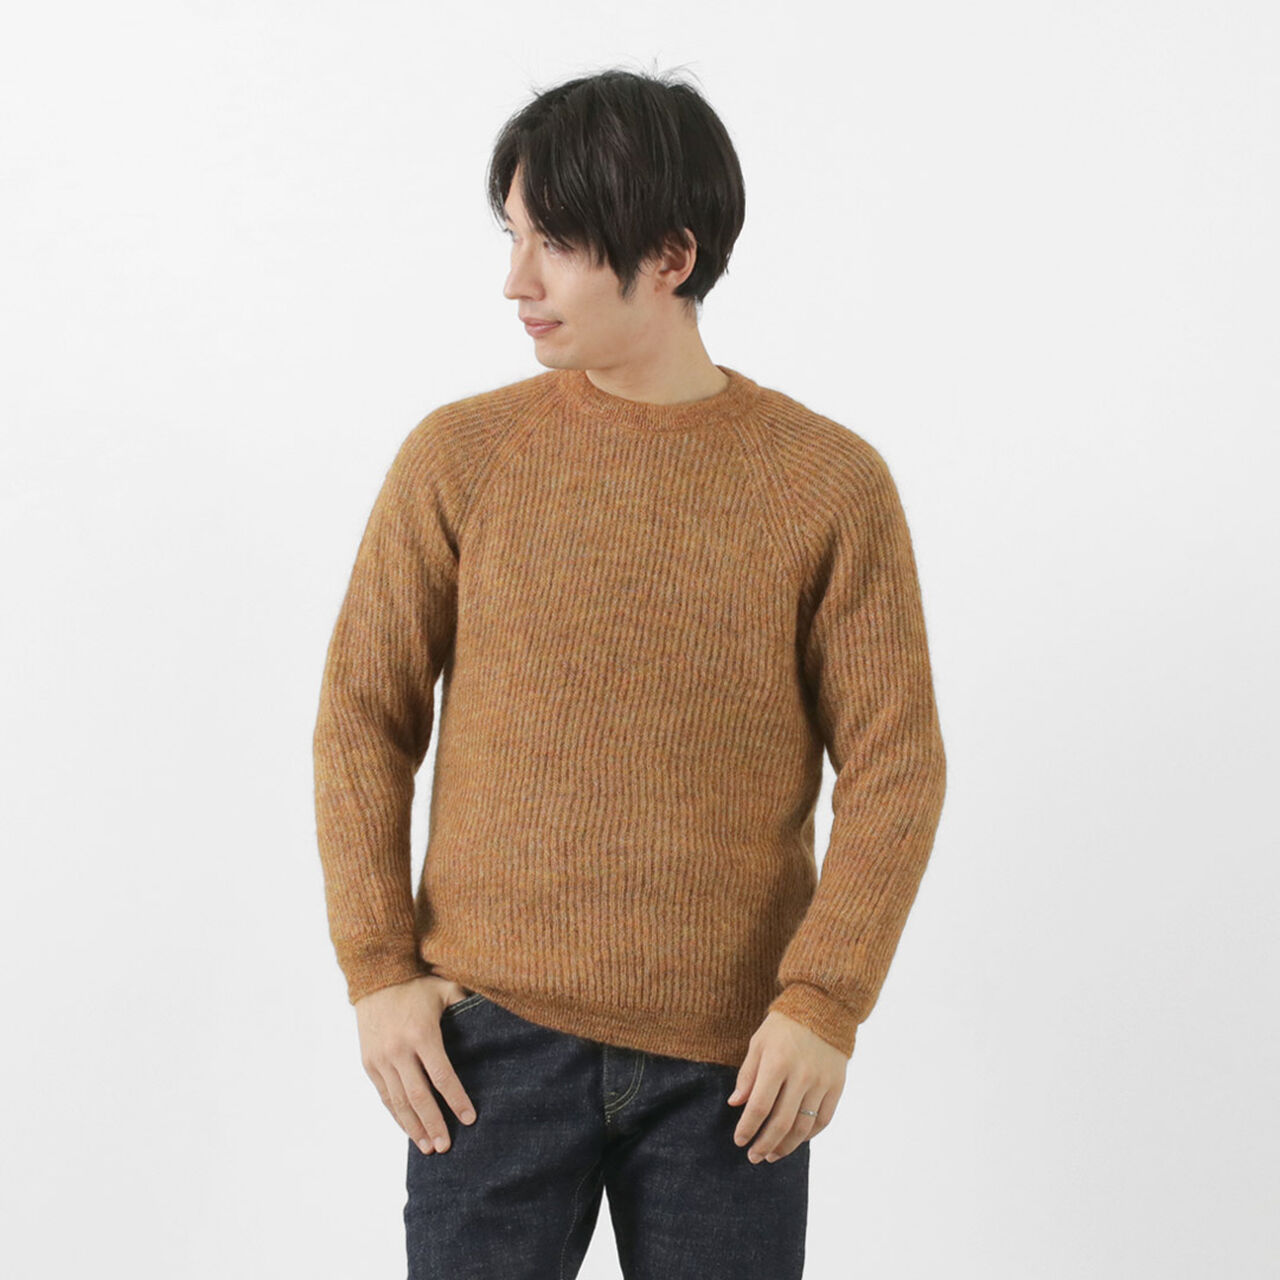 Portmix Kid Mohair Sweater,OrangeMix, large image number 0